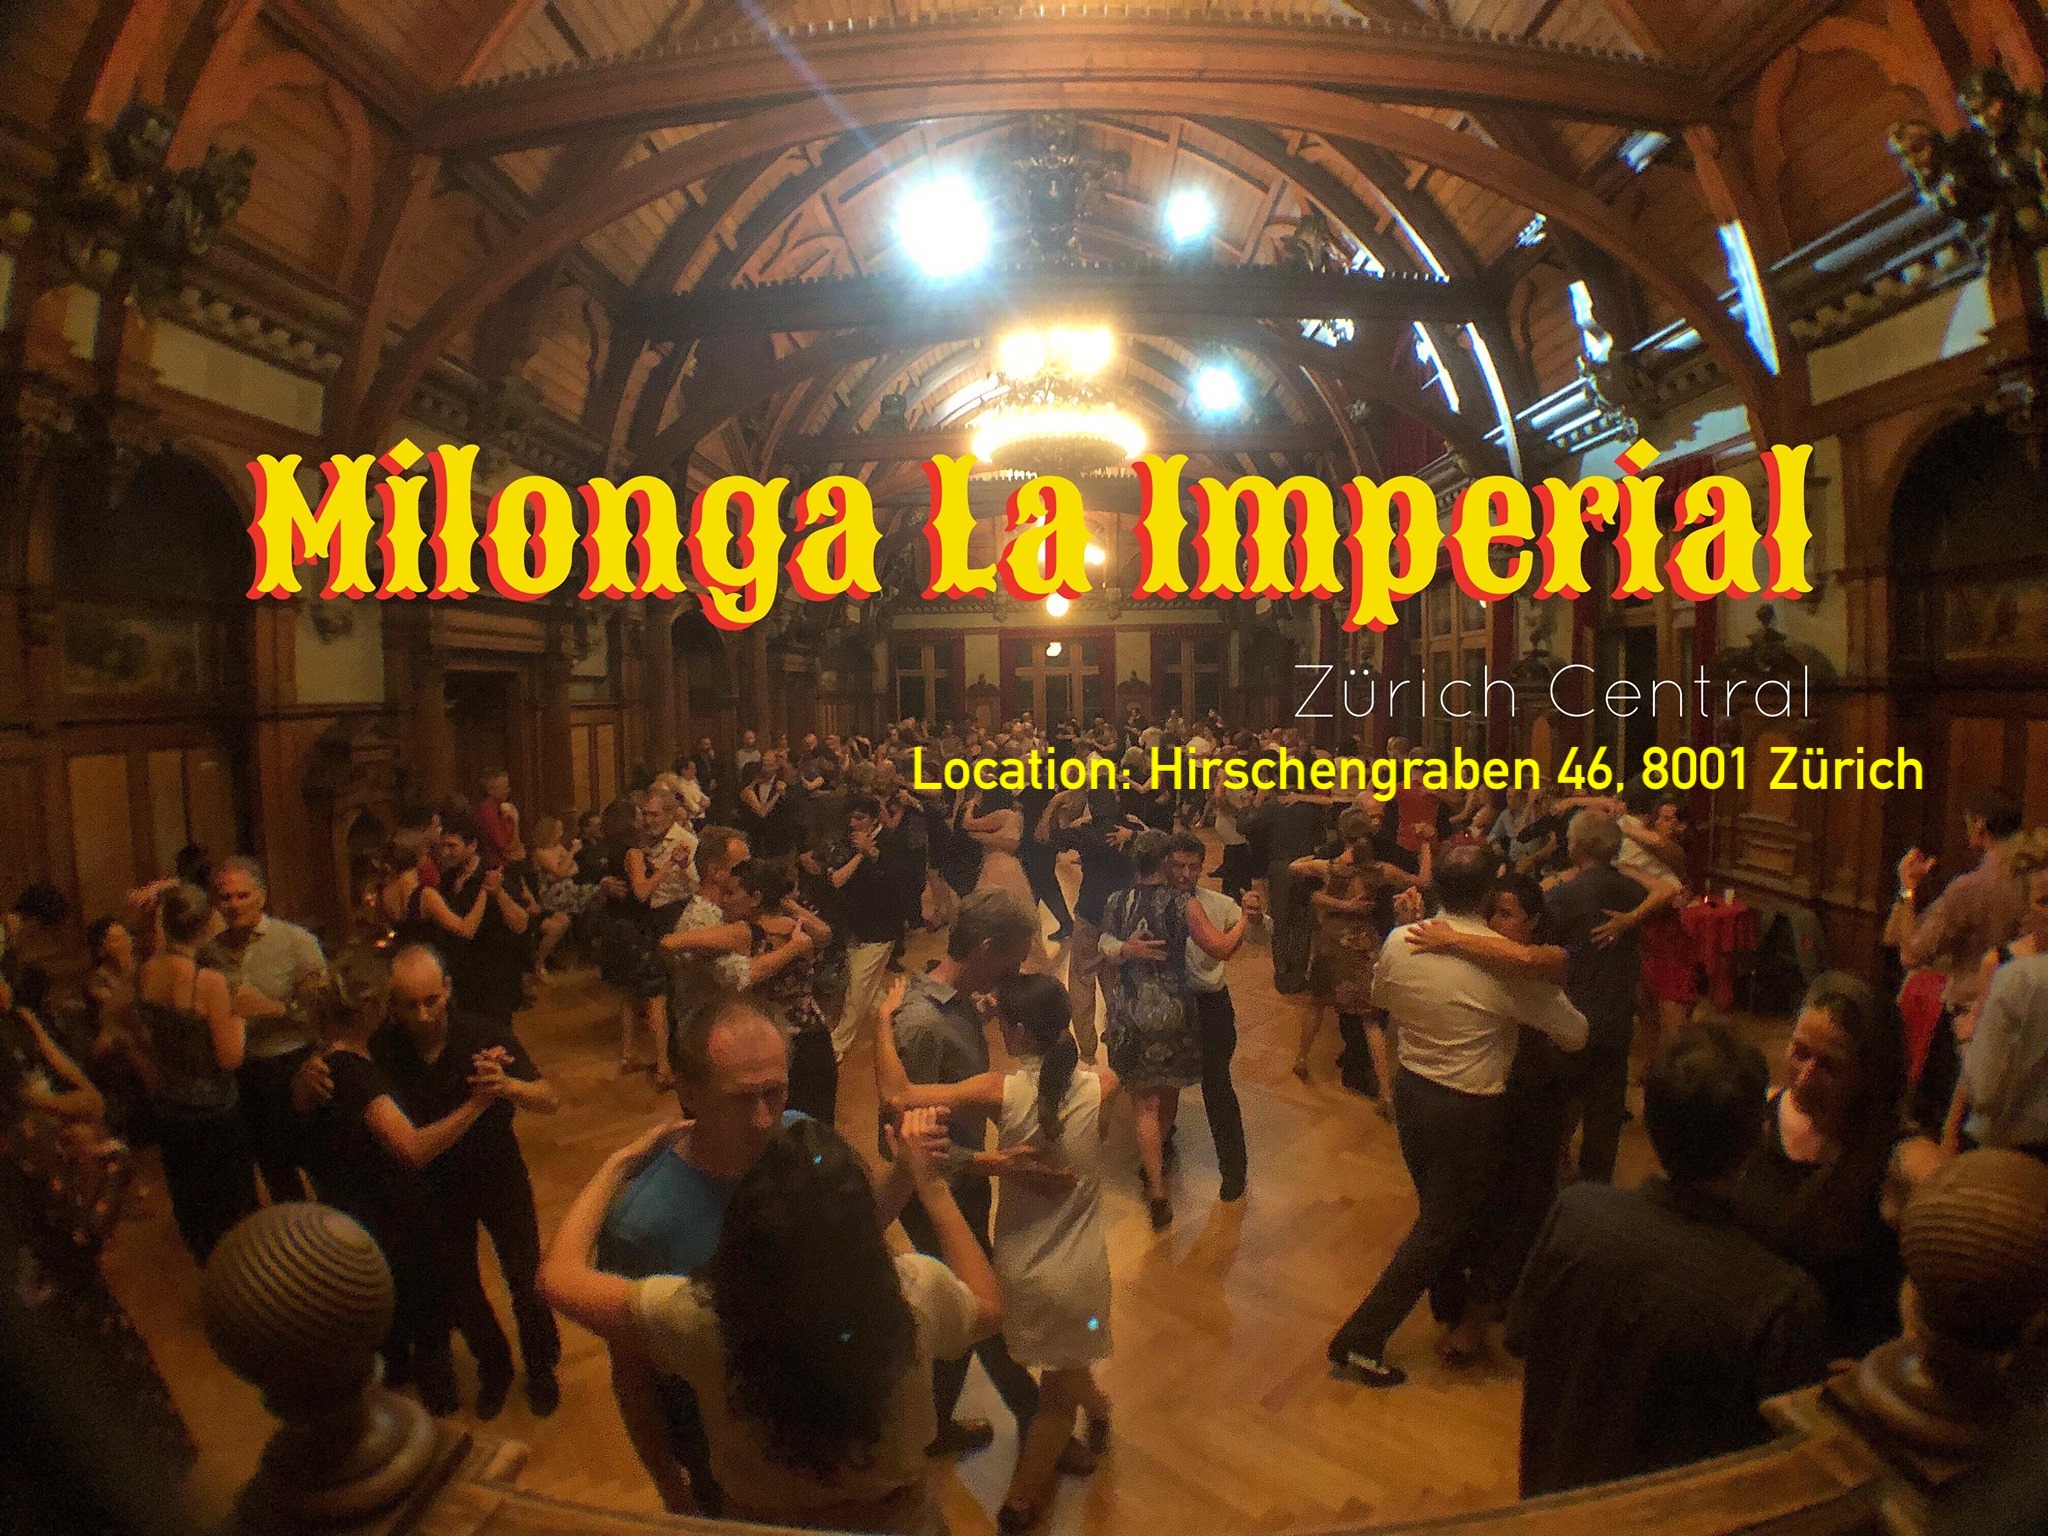 Milonga Imperial Zürich - November 23 Edition